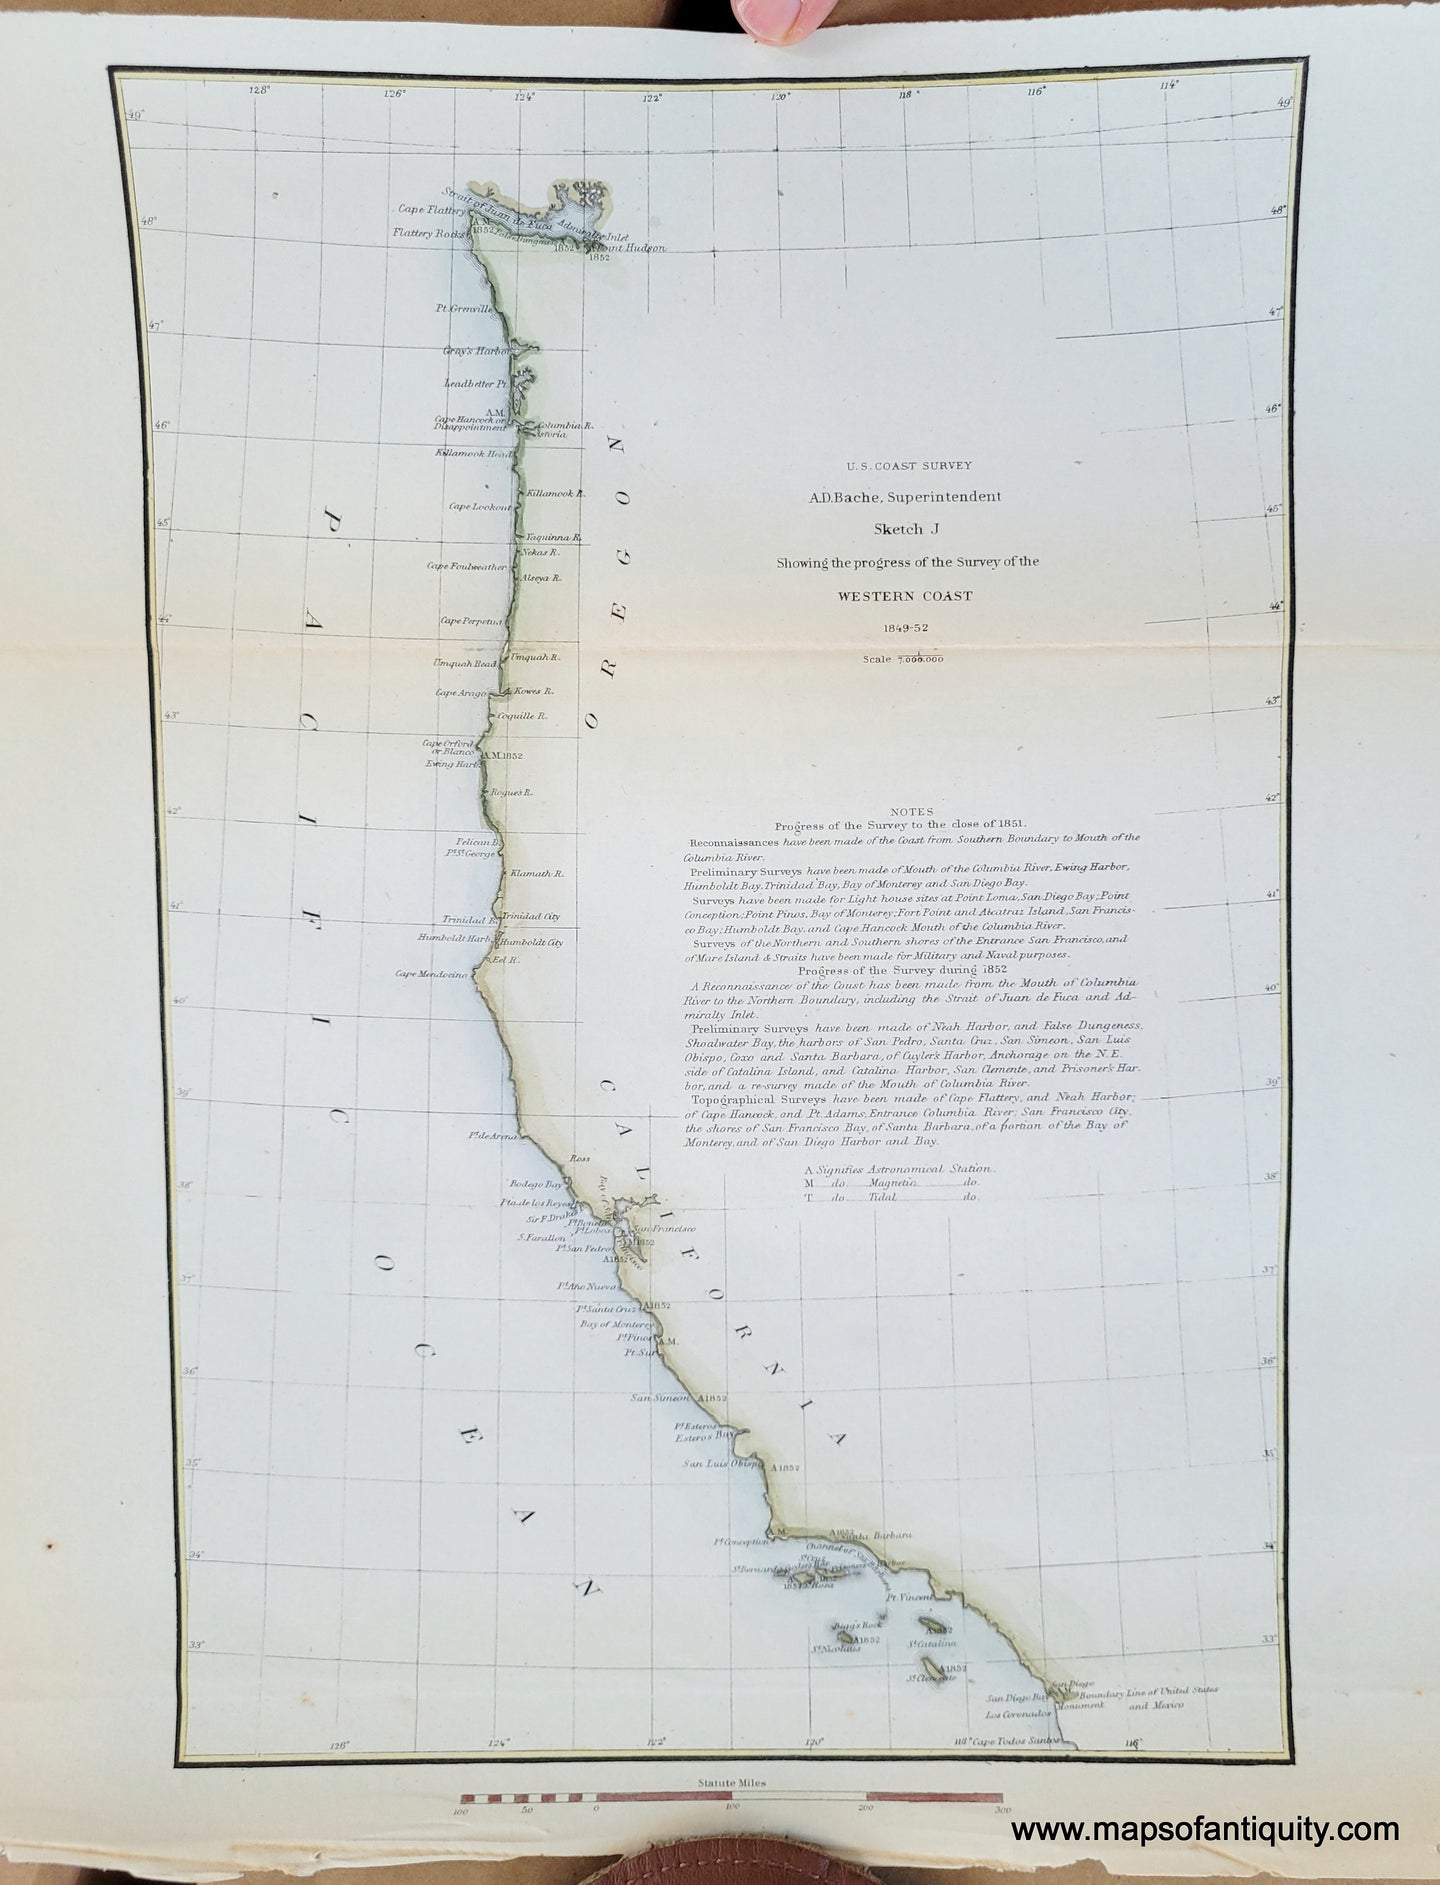 Hand-Colored-Antique-Coastal-Chart-Sketch-J-Showing-the-progress-of-the-Survey-of-the-Western-Coast**********-United-States-West-1852-U.S.-Coast-Survey